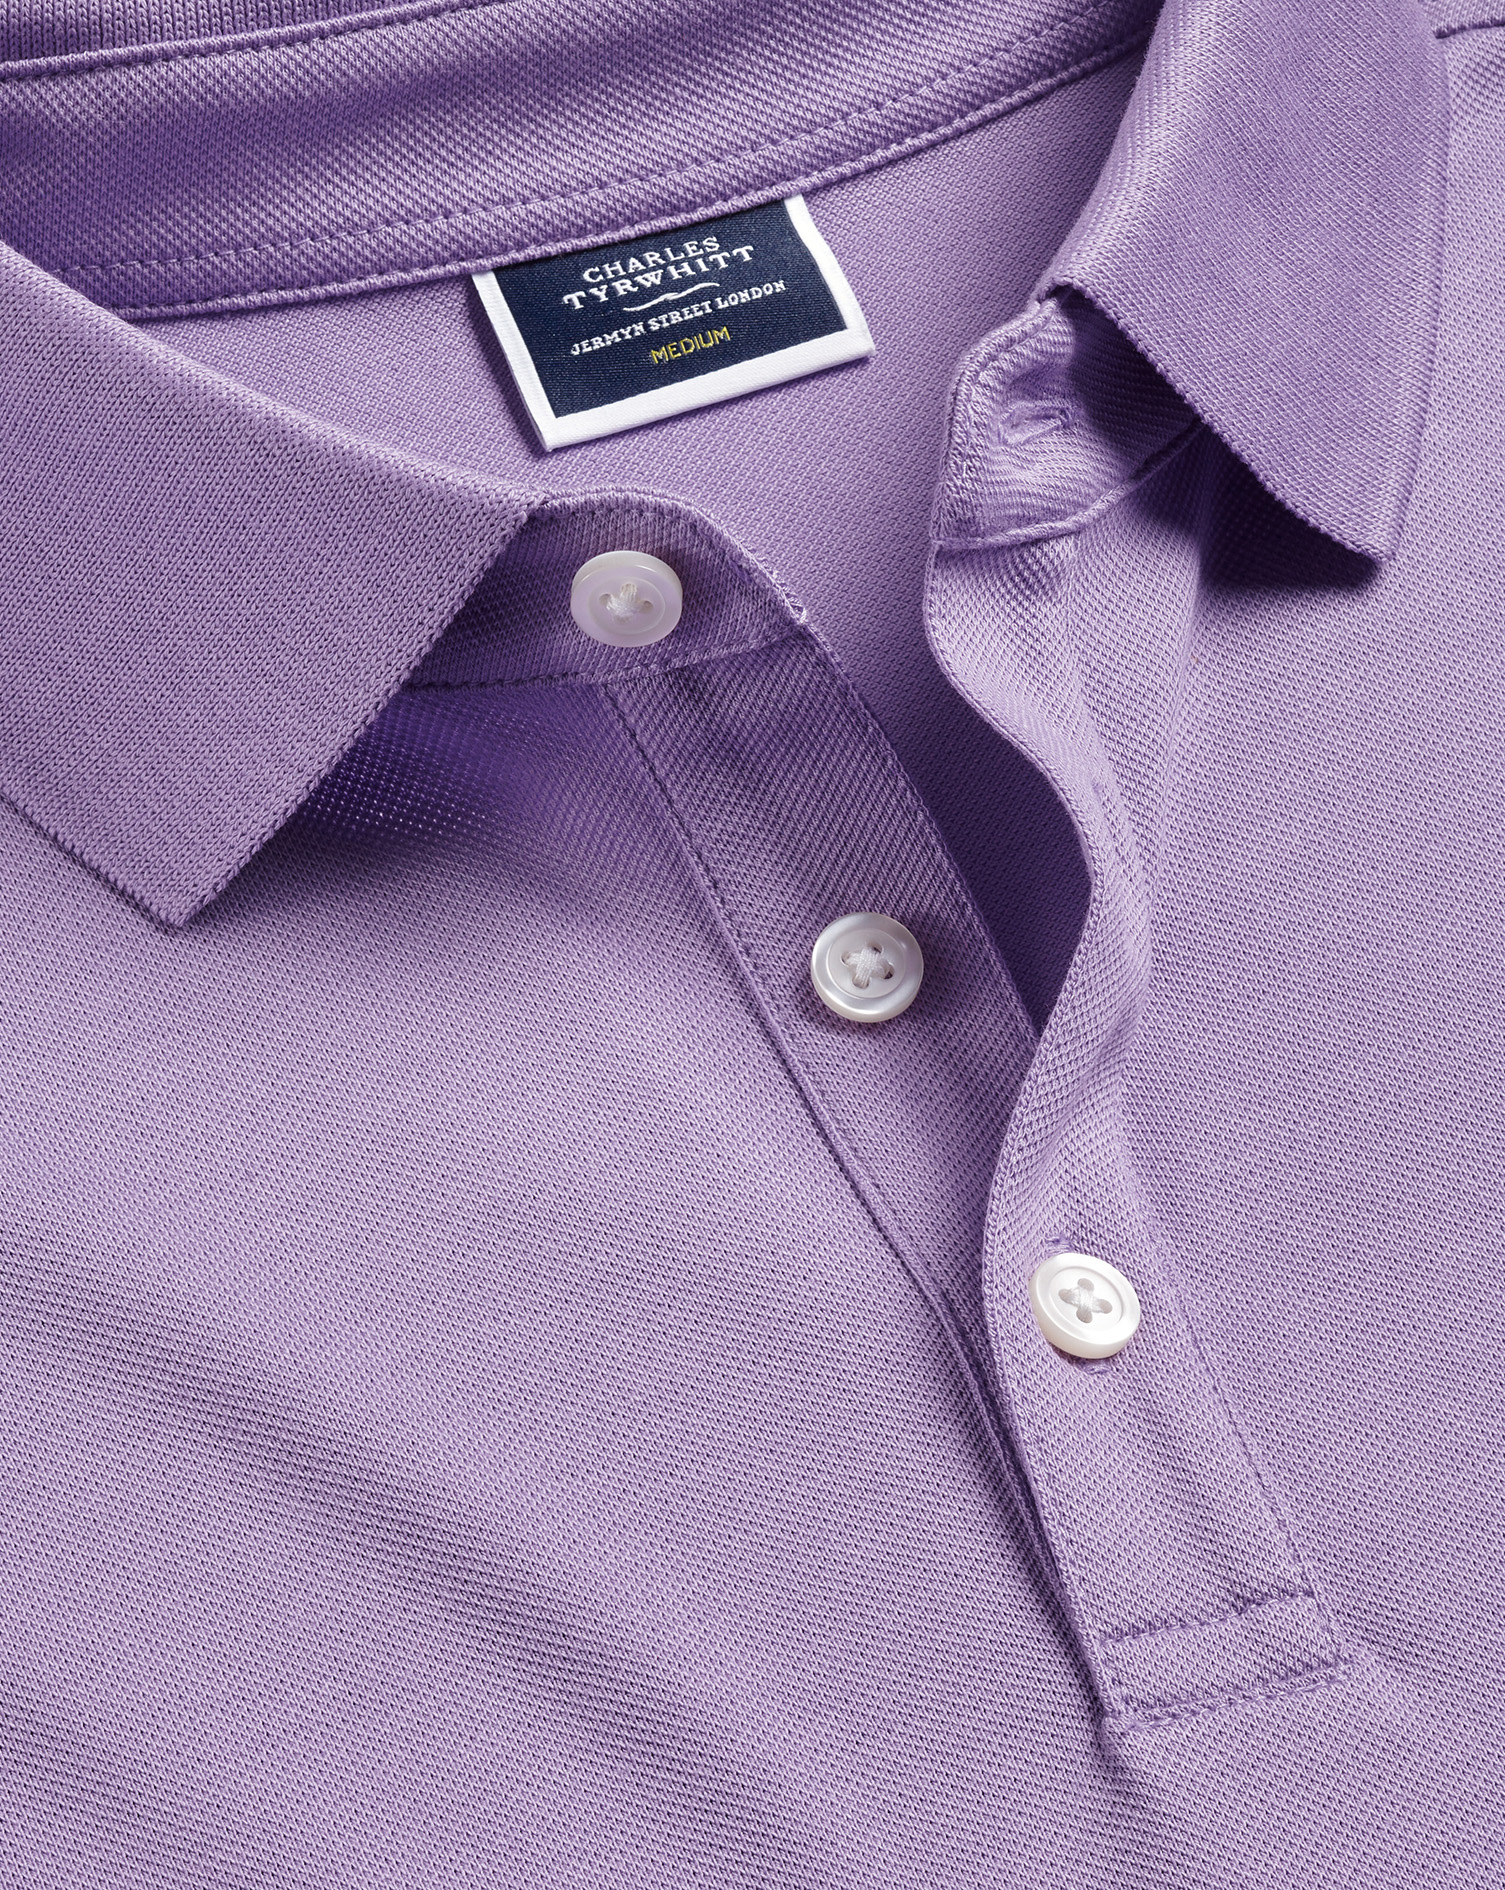 Men's Charles Tyrwhitt Pique Polo Shirt - Lilac Purple Size XL Cotton
